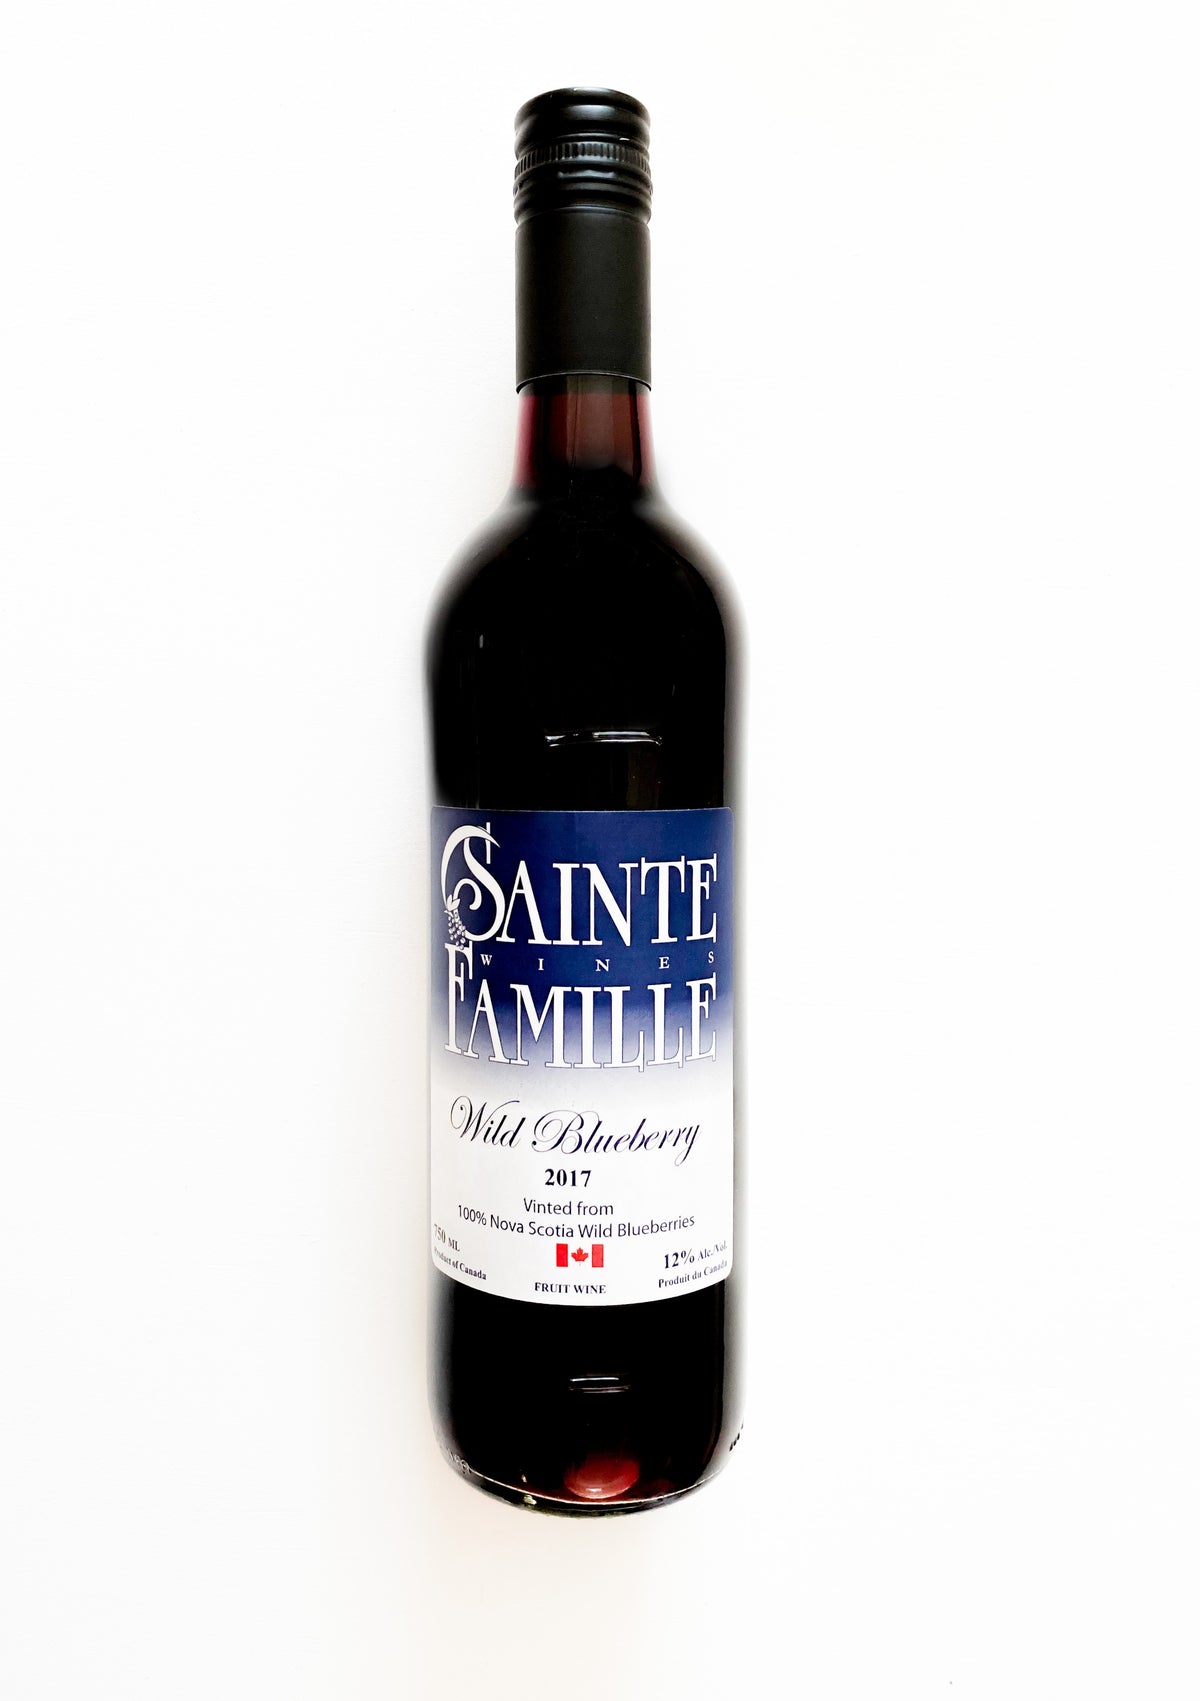 Bottle of Sainte-Famille Wild Blueberry wine.